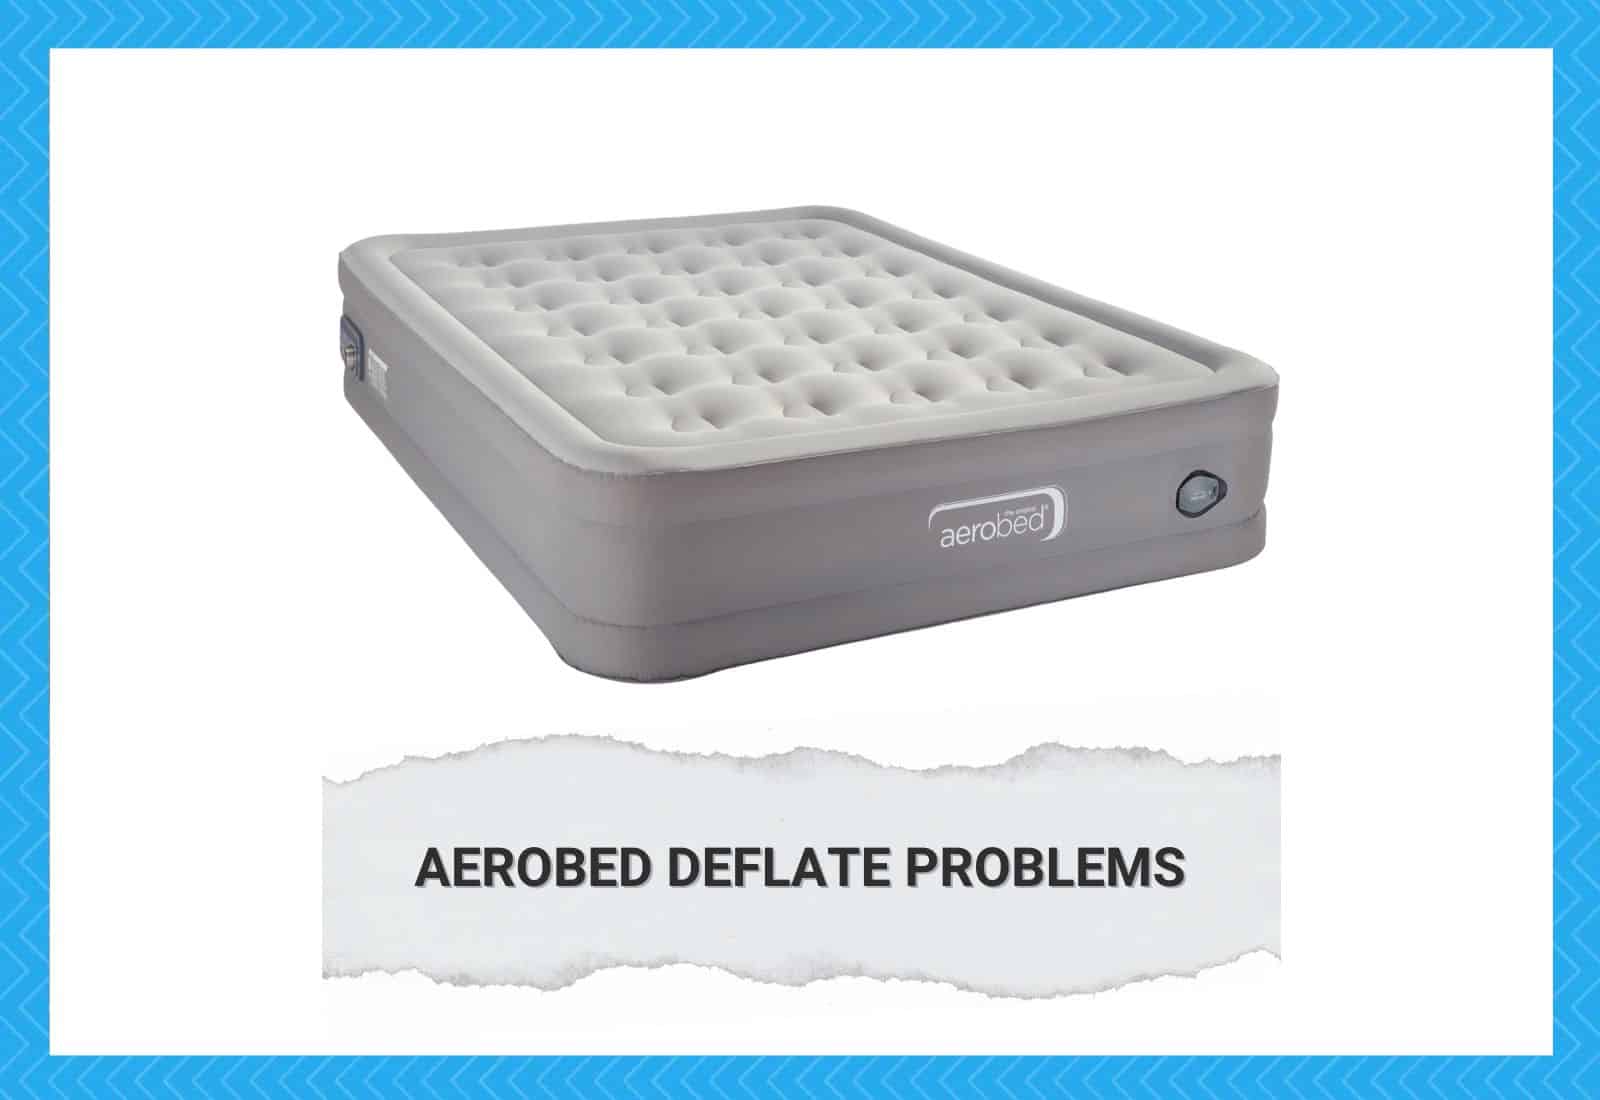 Aerobed Deflate Problems